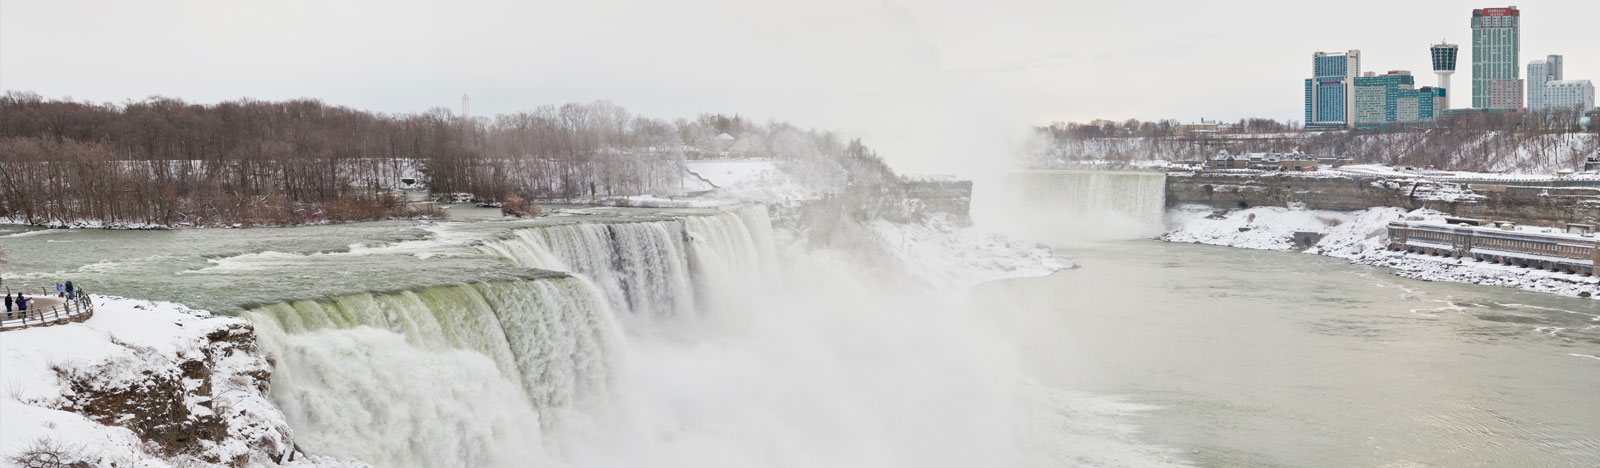 Photo Gallery New Year’s Eve Niagara Falls